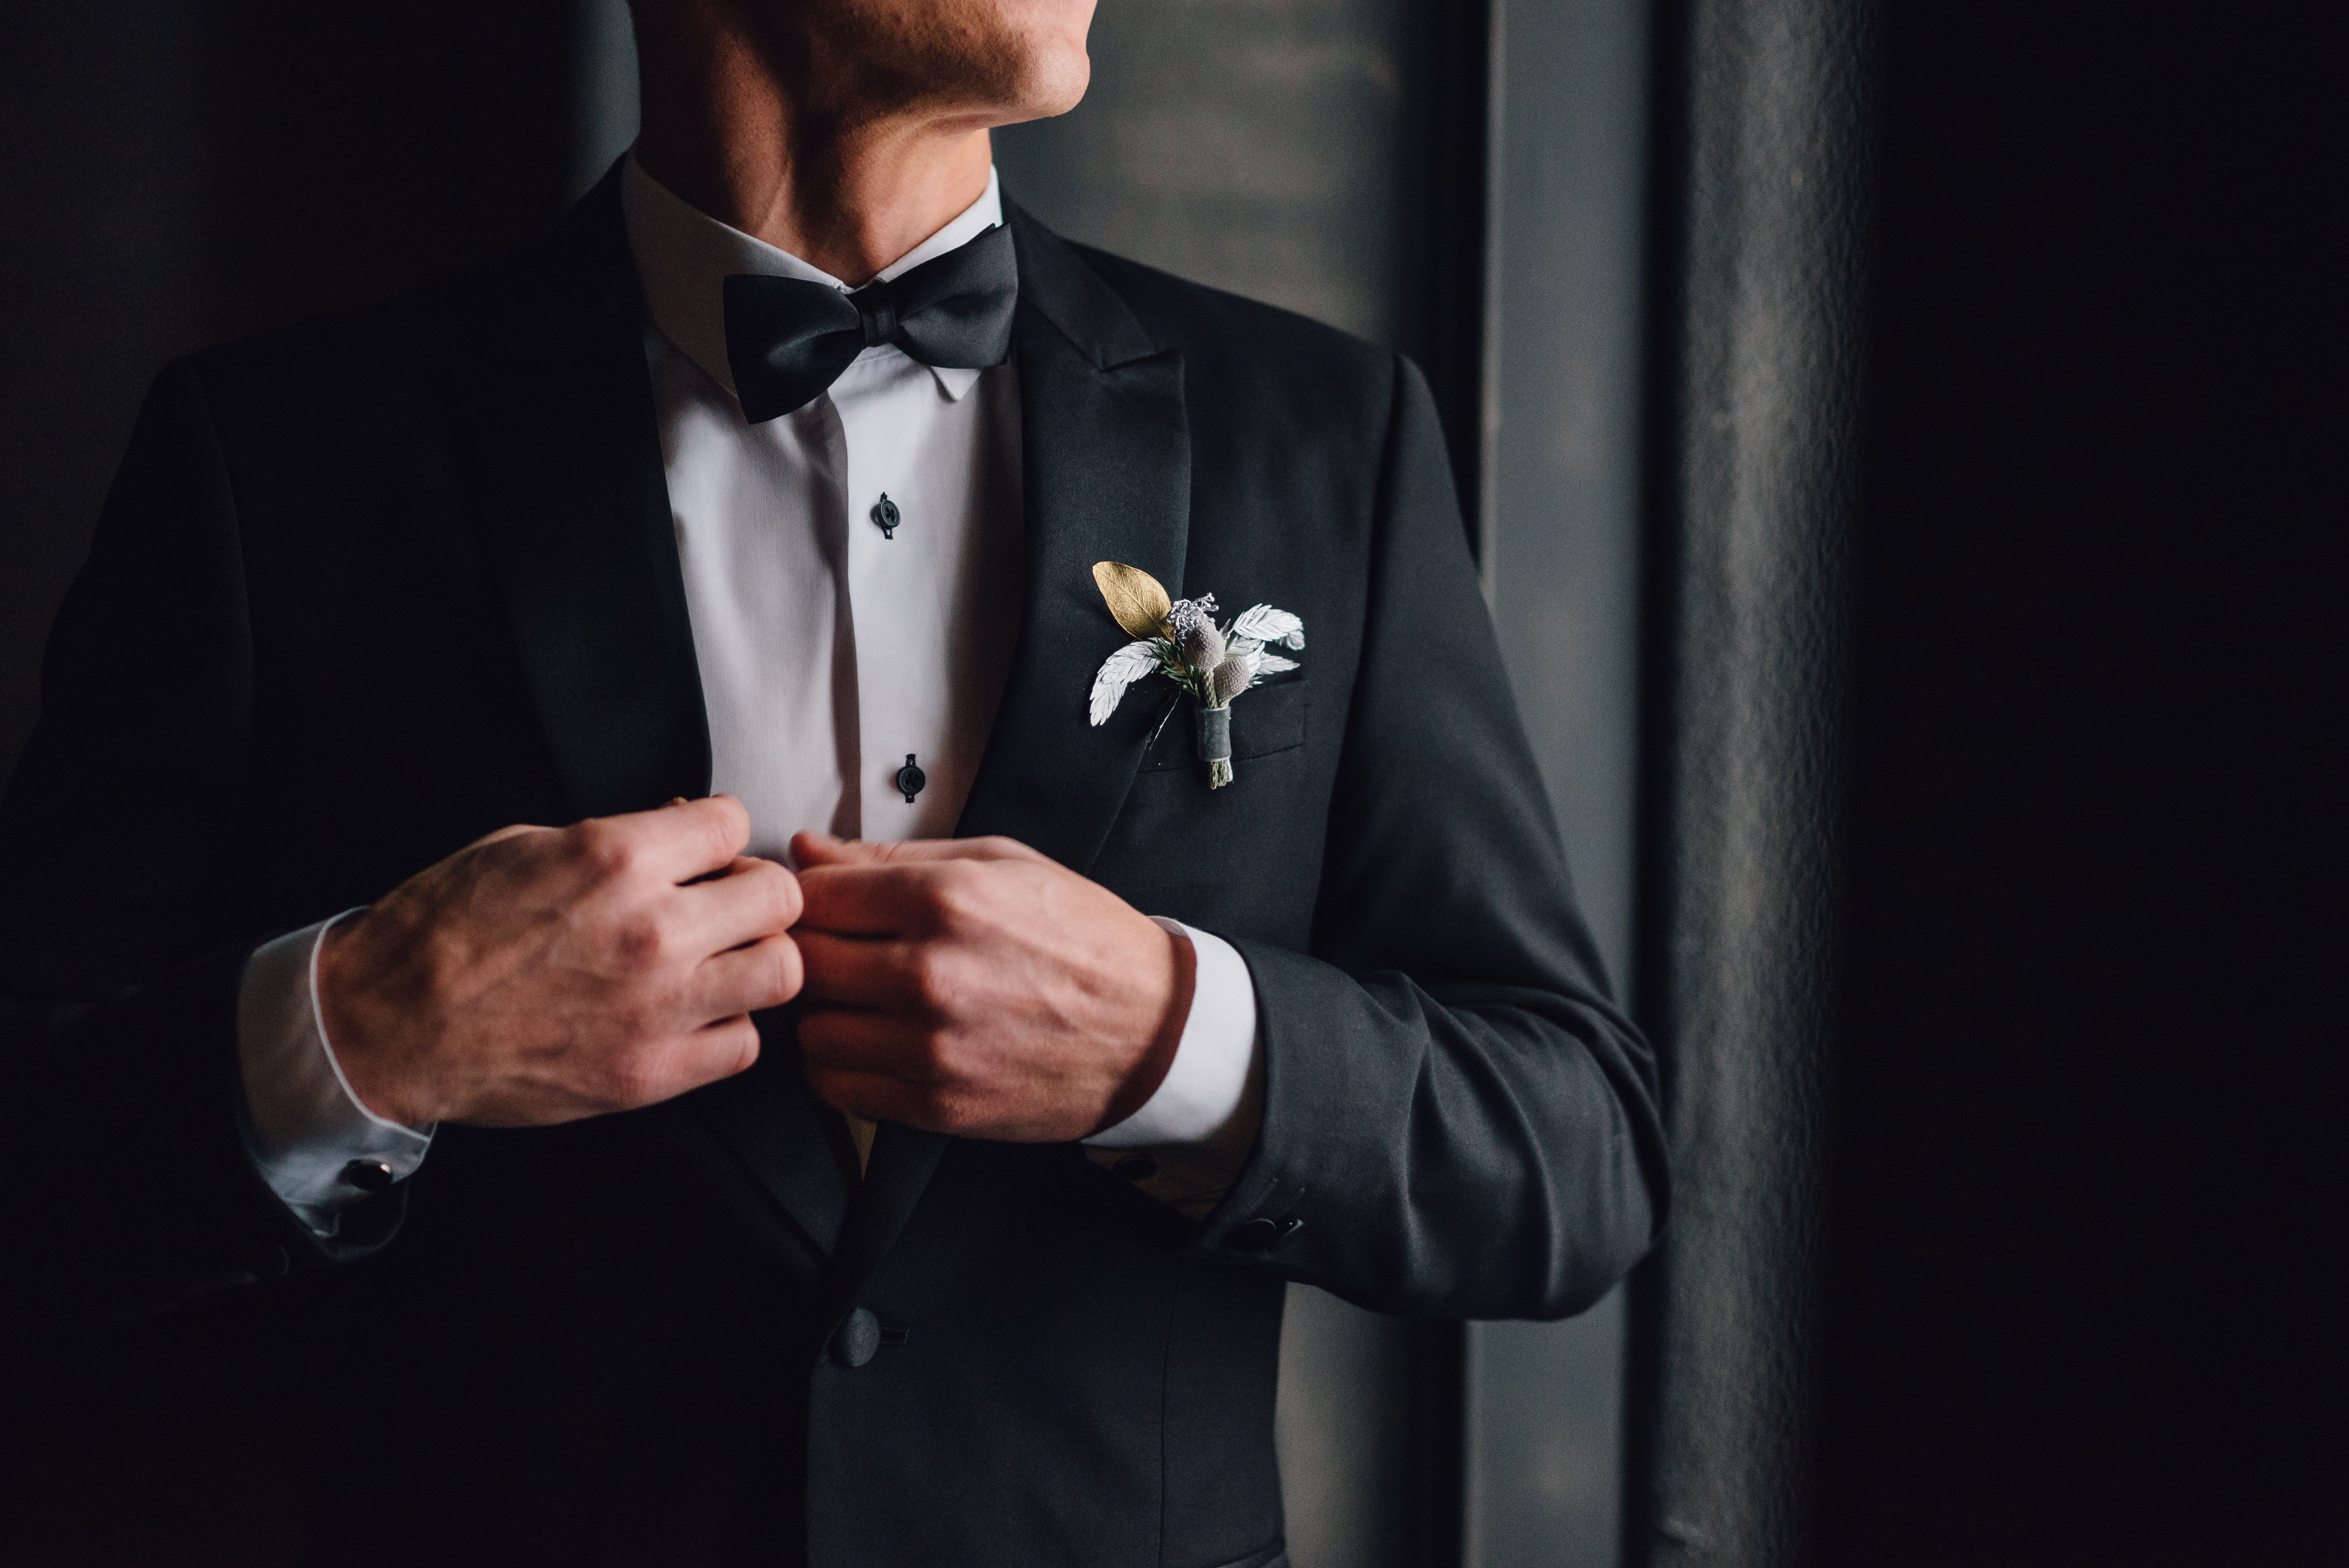 Groom in black tuxedo | Source: Shutterstock